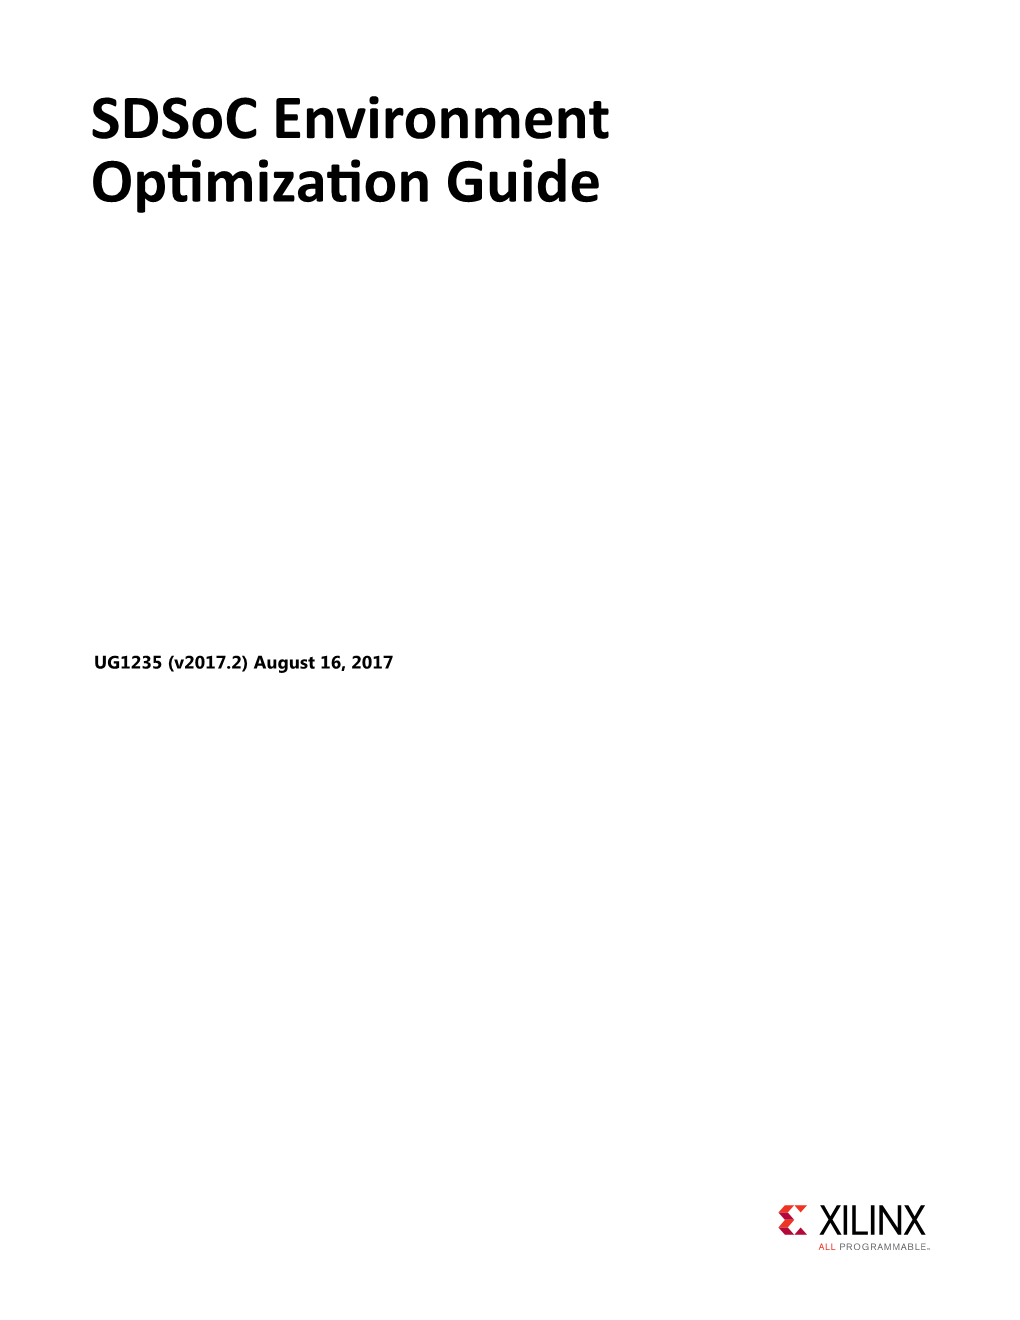 Sdsoc Environment Optimization Guide (UG1235) 4